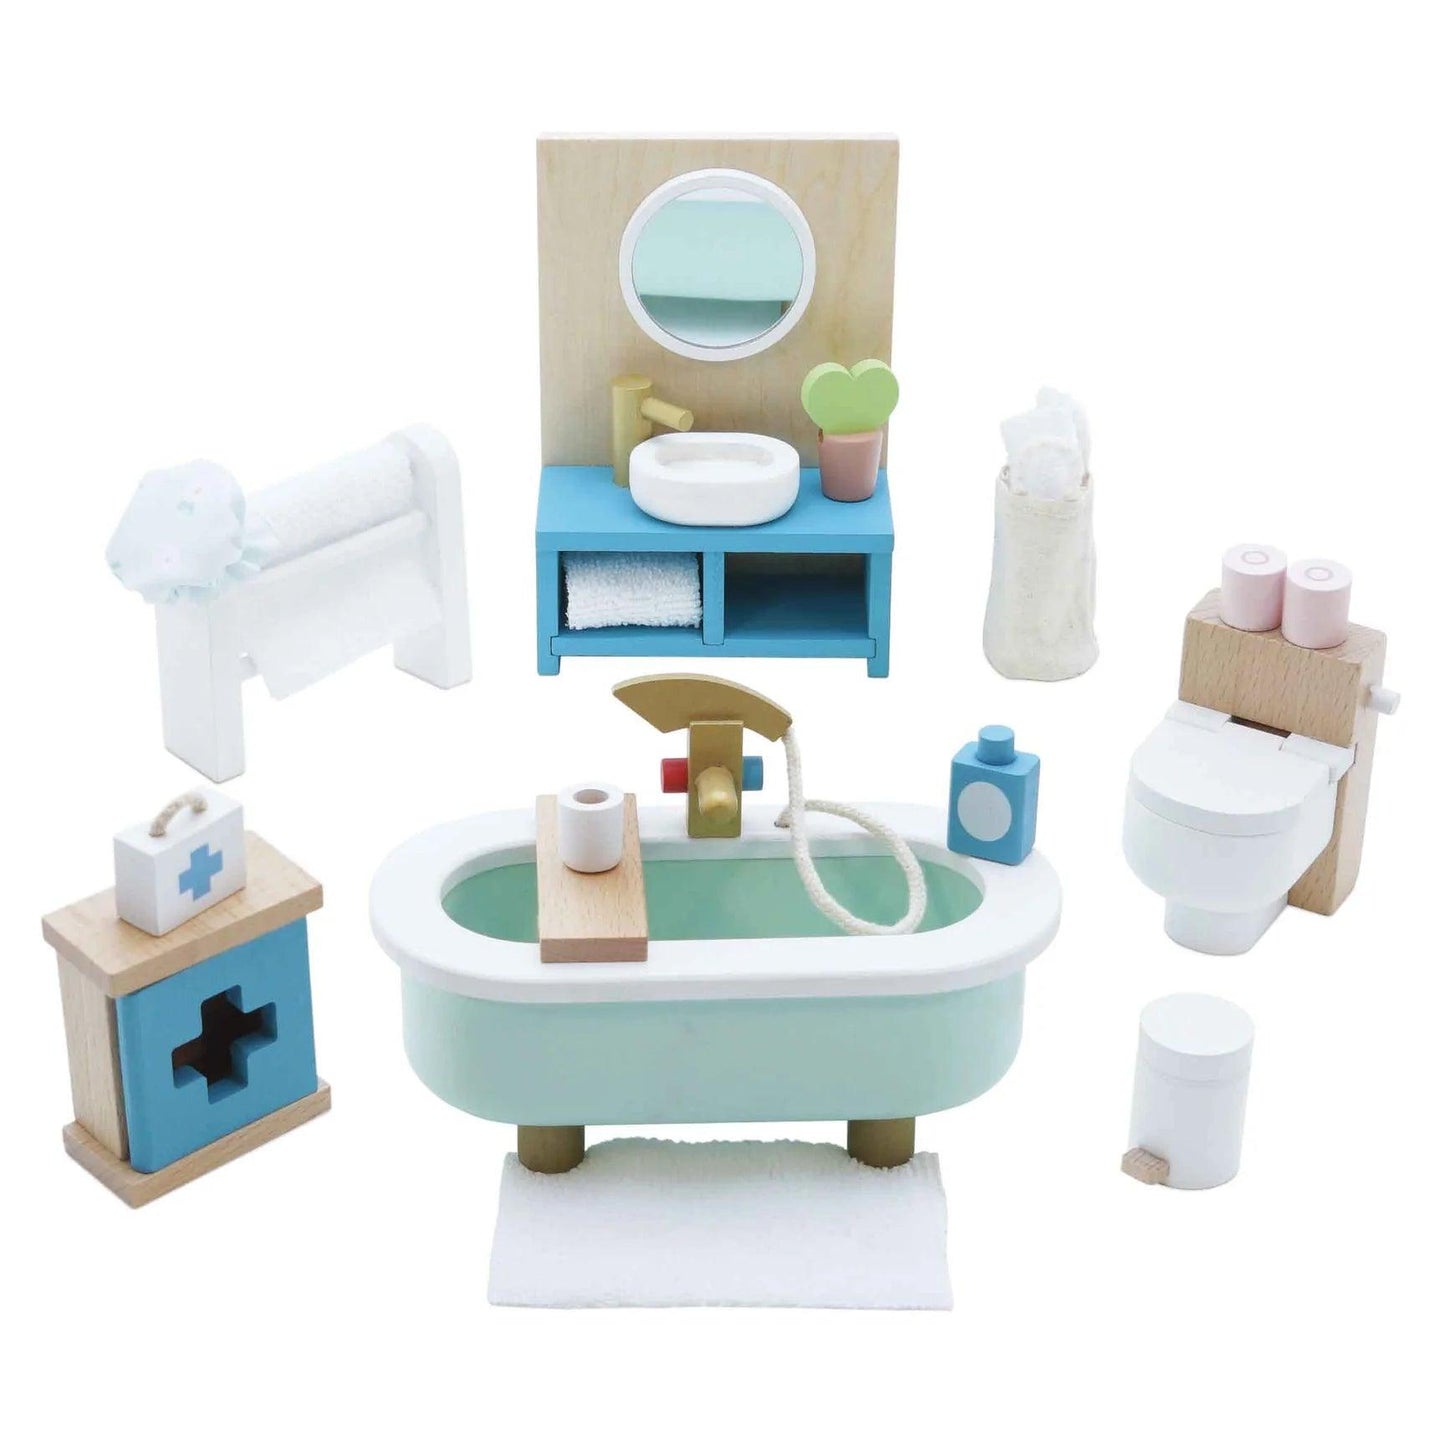 Doll House Bathroom Set - Gigglewick Gallery